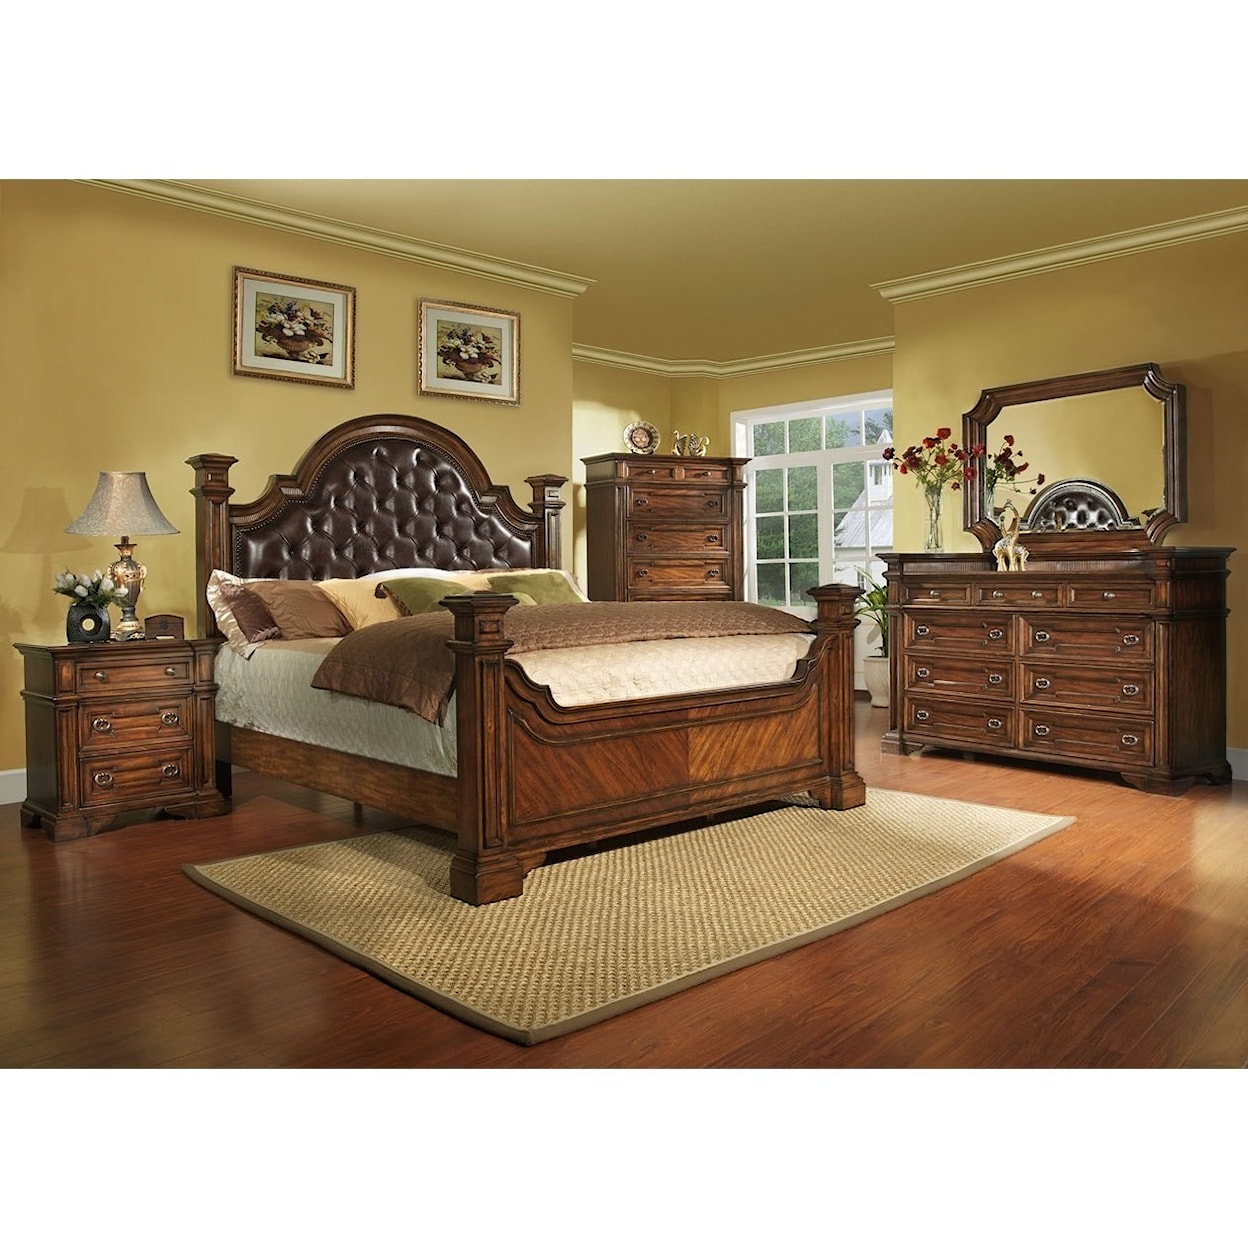 Avalon Furniture Highland Ridge Queen Bedroom Group